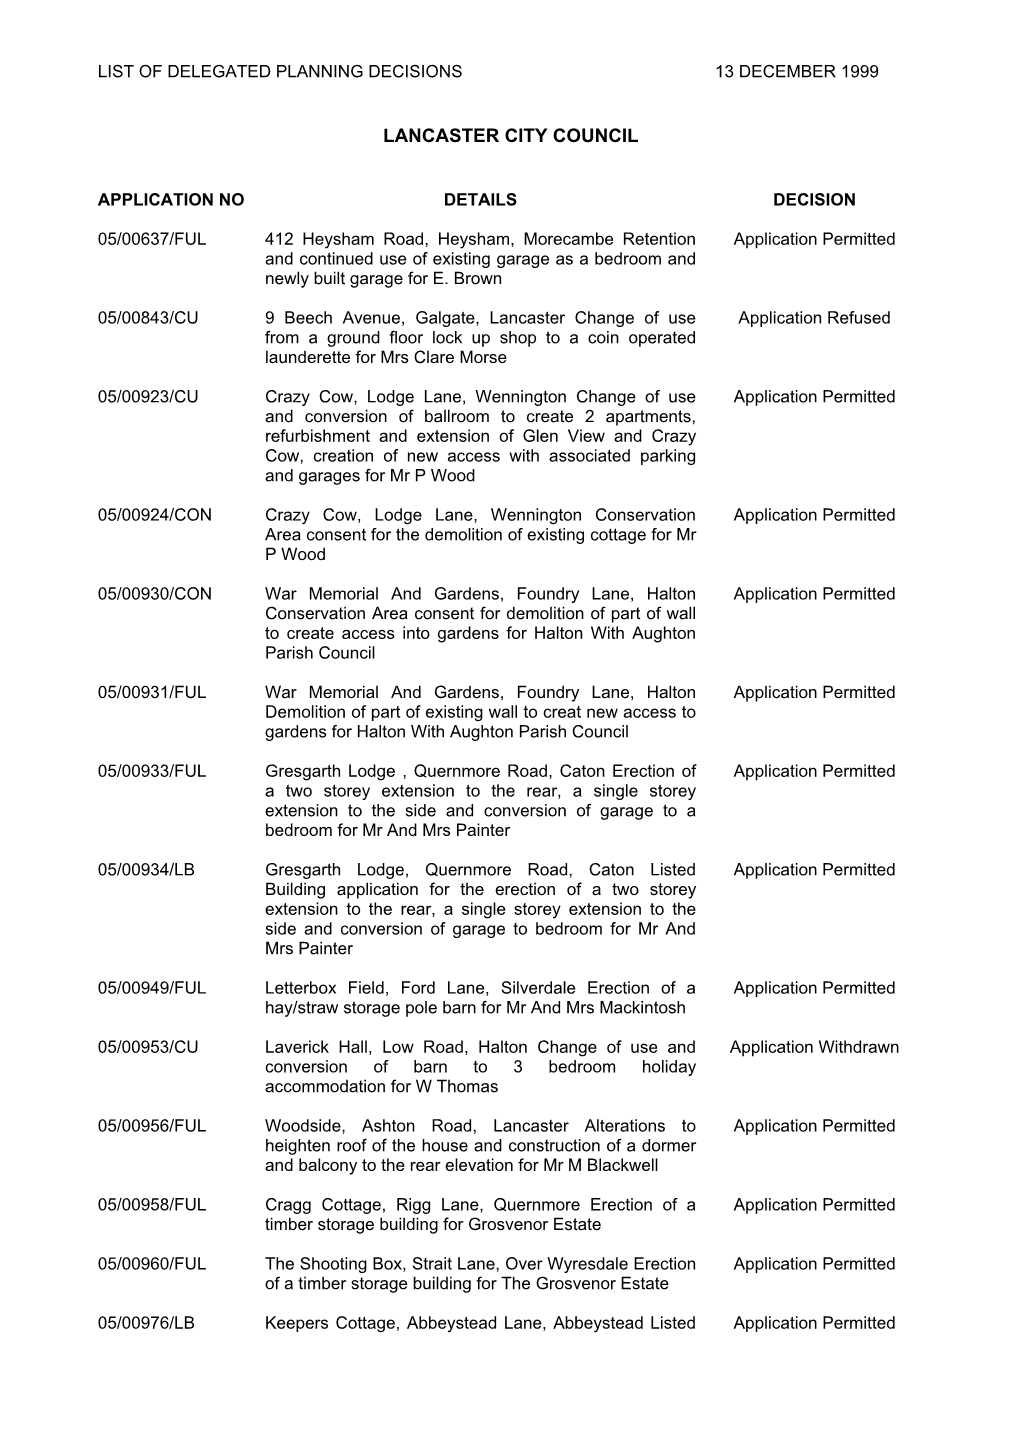 List of Delegated Planning Decisions 13 December 1999